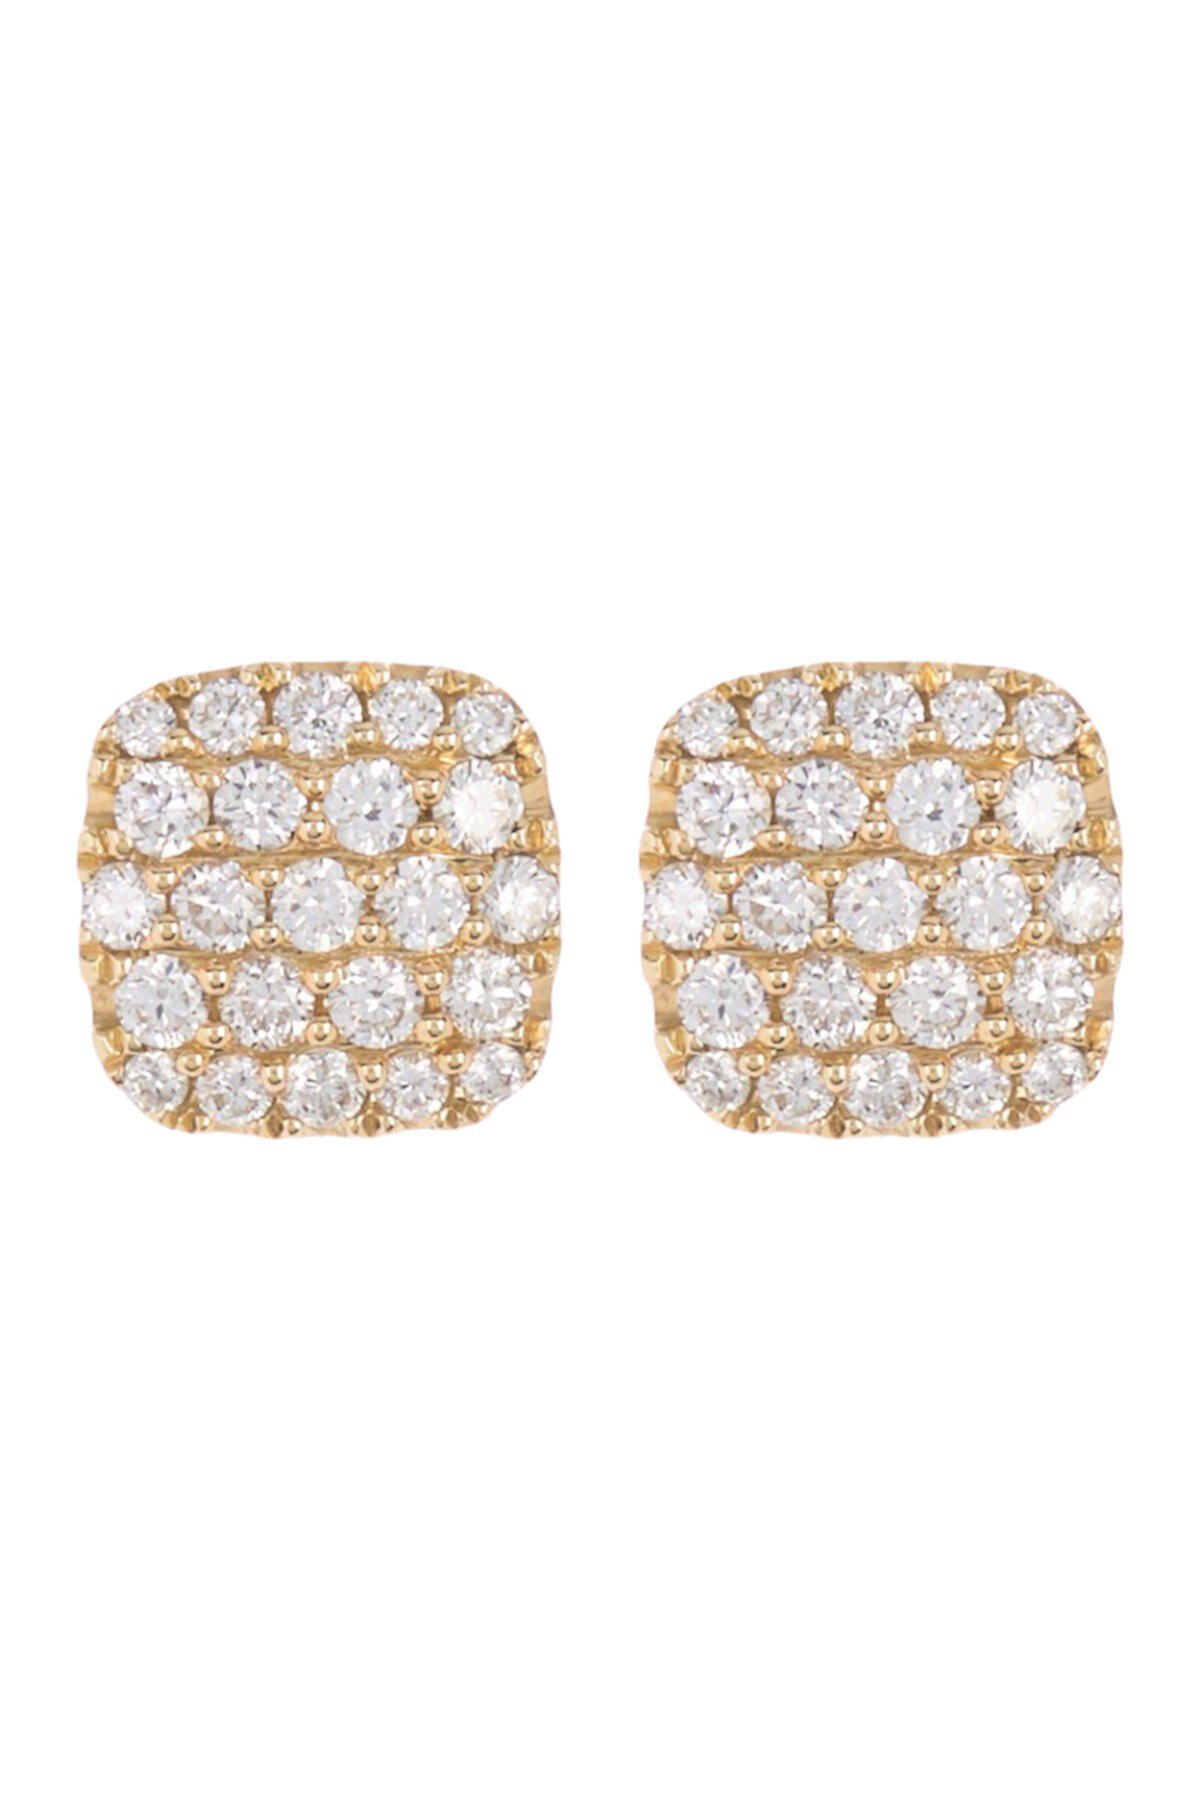 14K Yellow Gold Pave Diamond Stud Earrings - 0.50 ctw Ron Hami